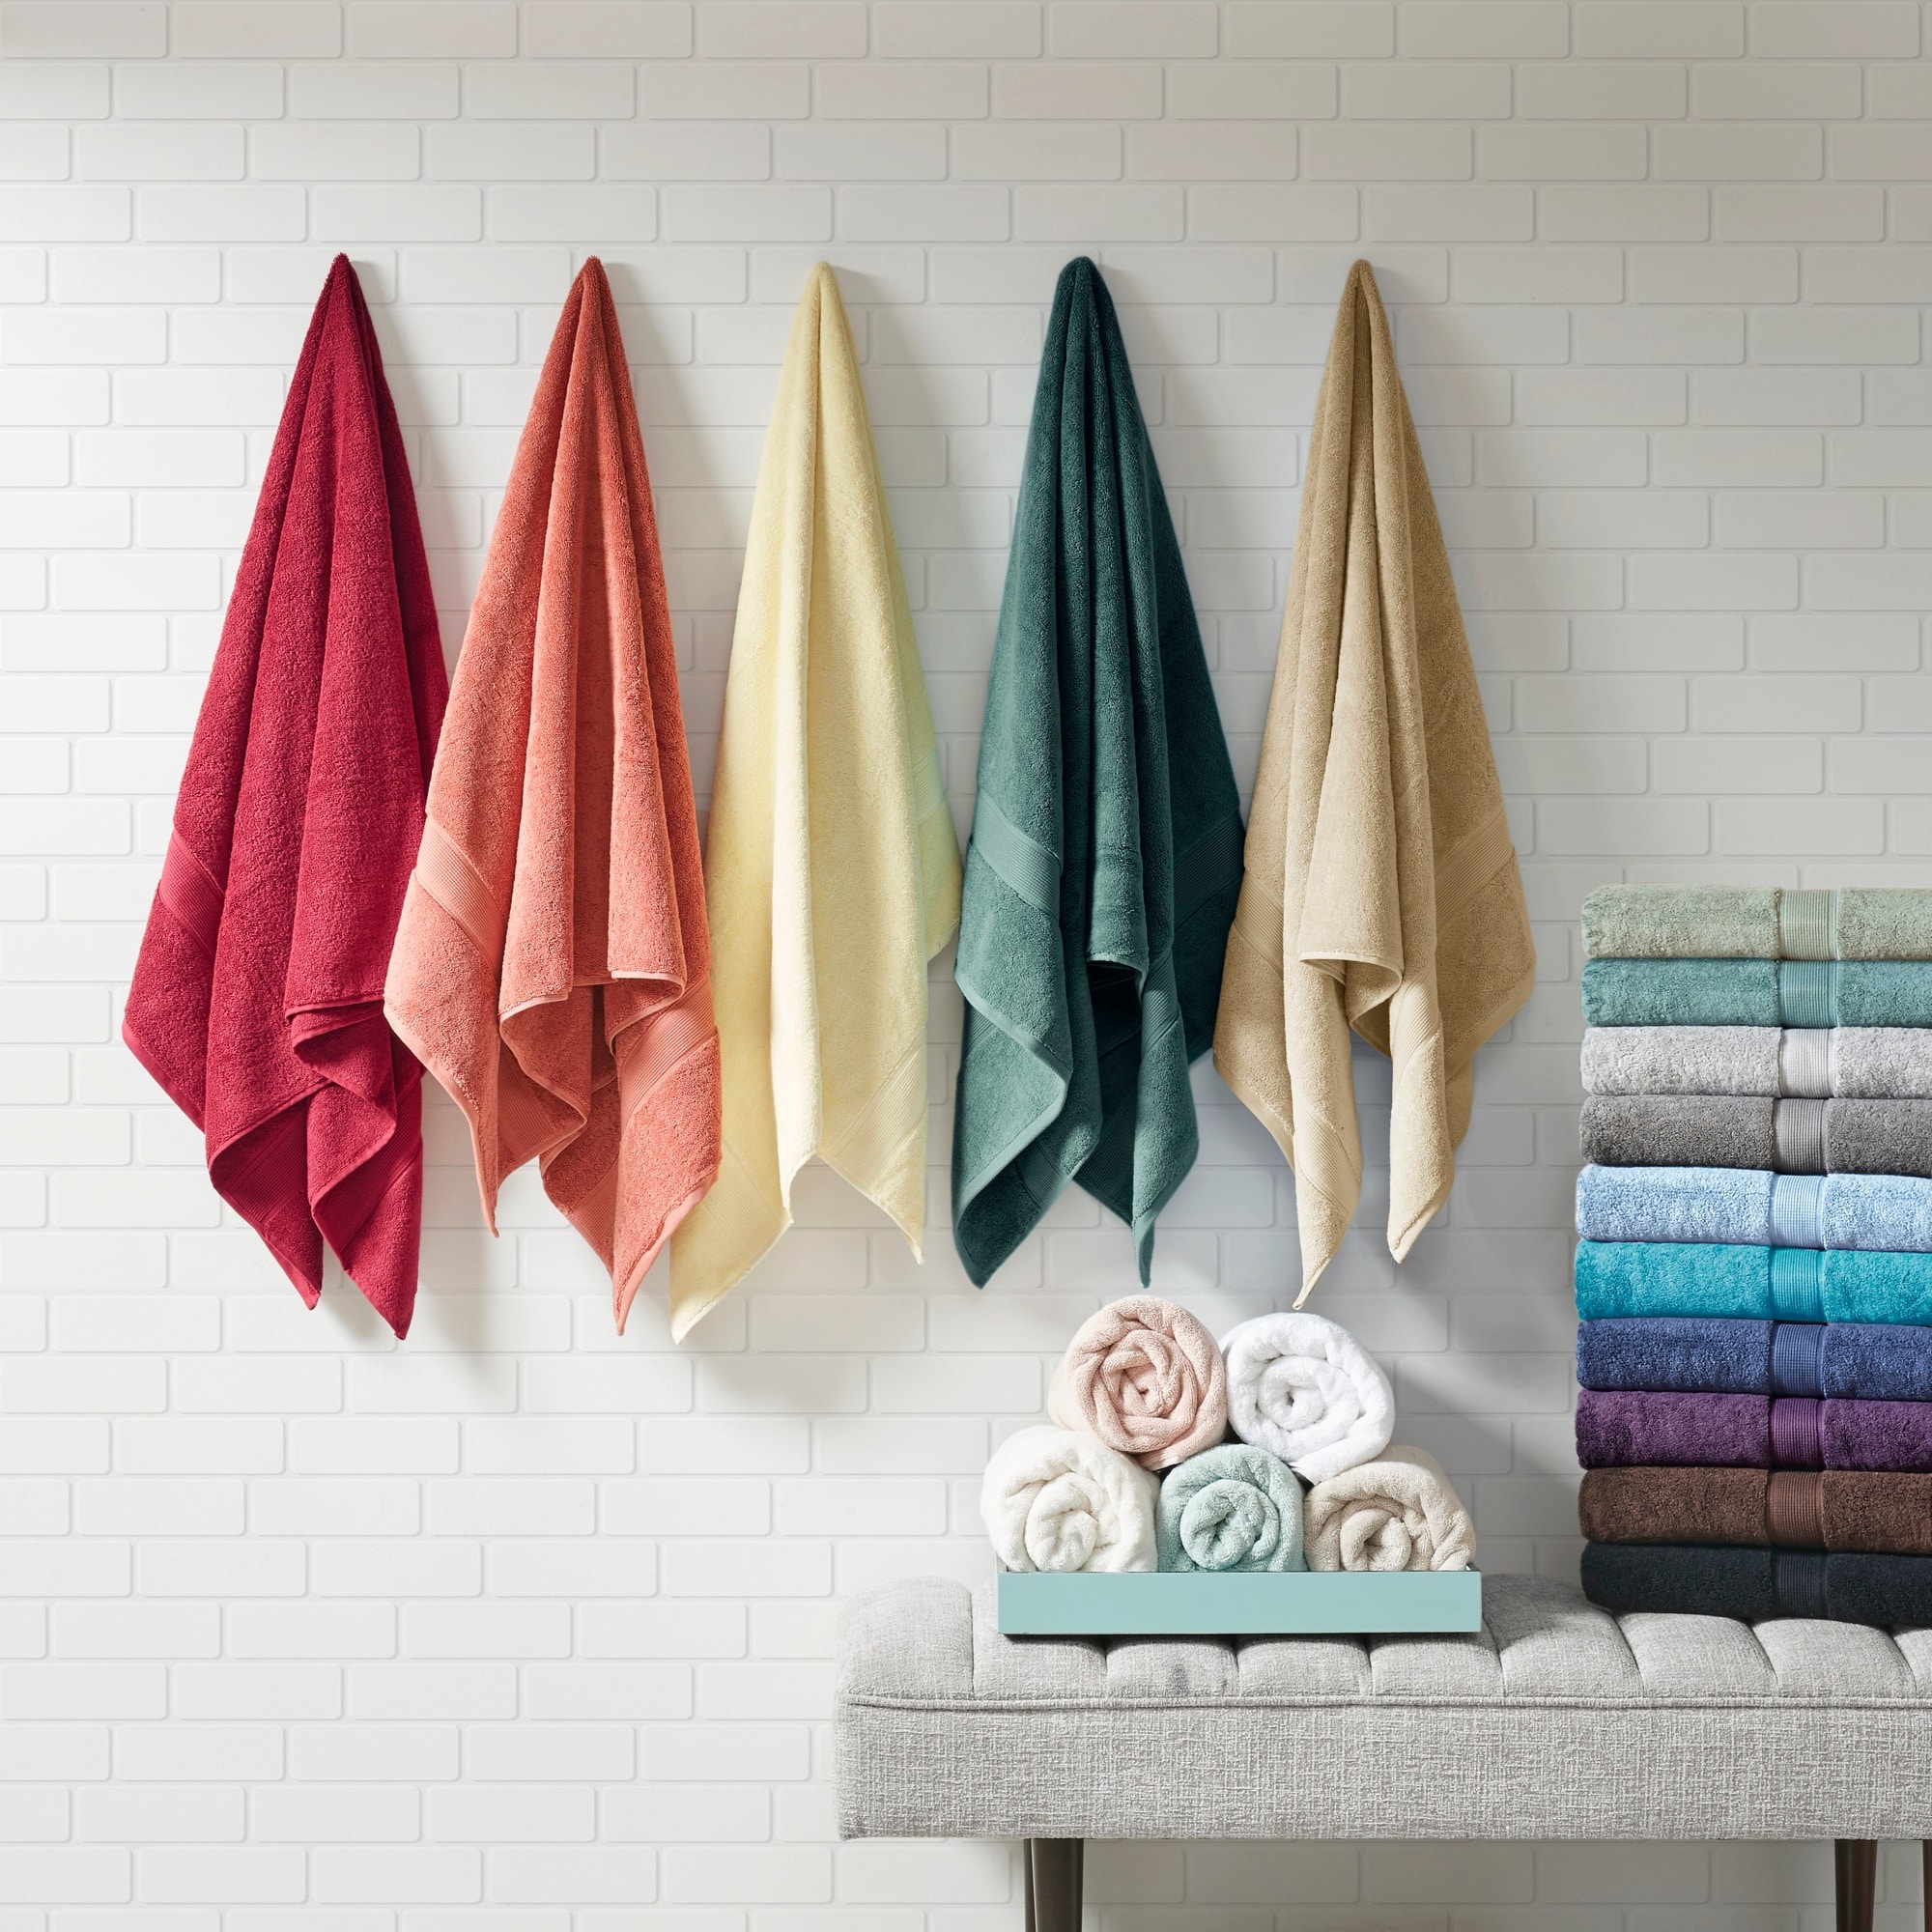 Monogrammed Bath Towel Sets-Signature Monogram Towels